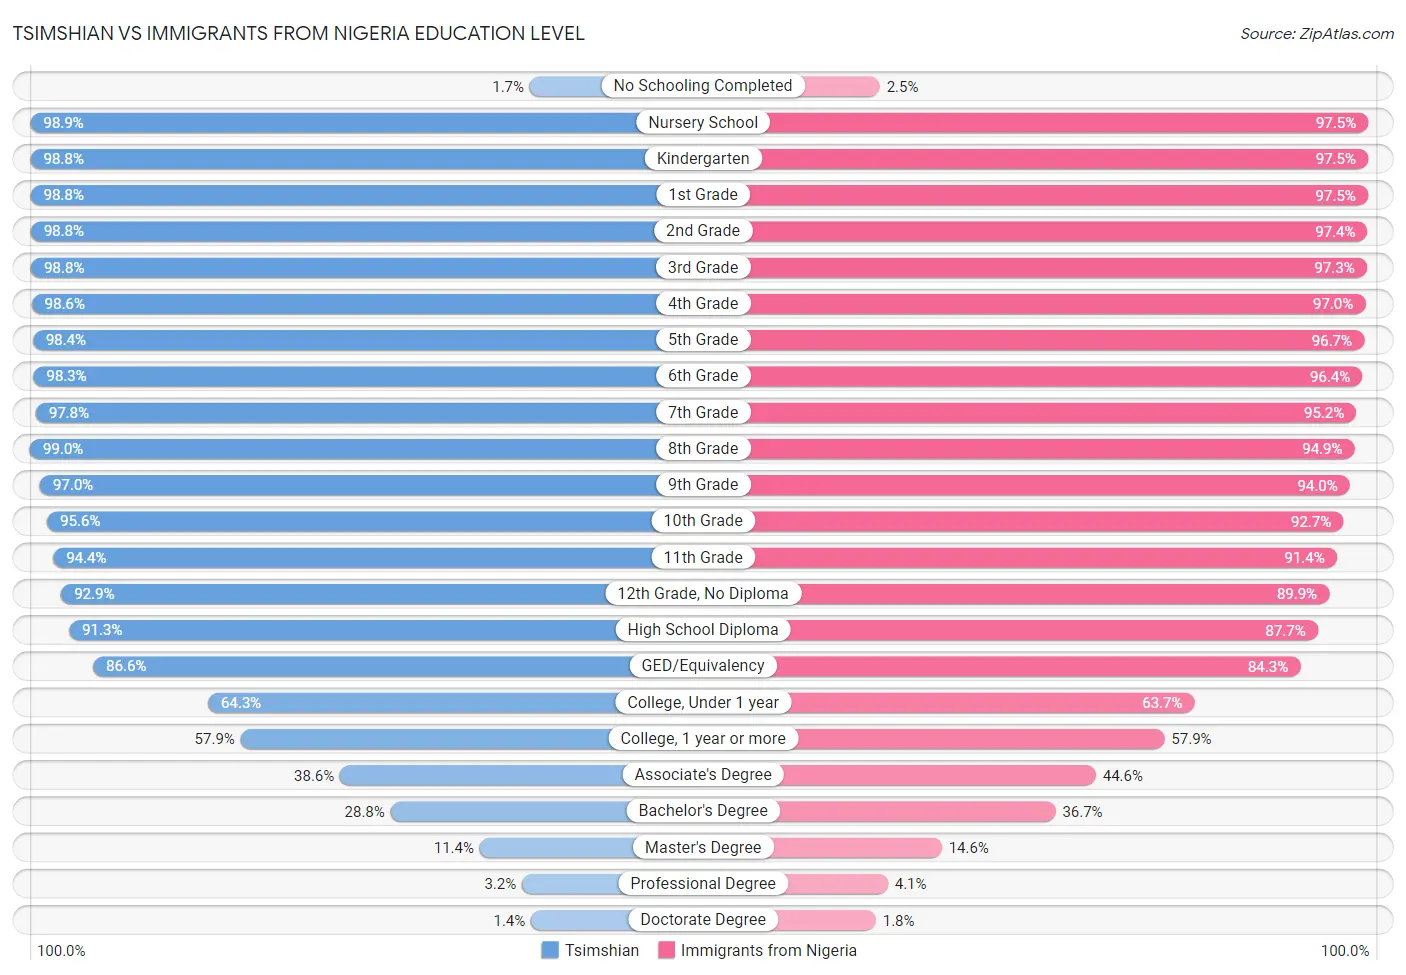 Tsimshian vs Immigrants from Nigeria Education Level